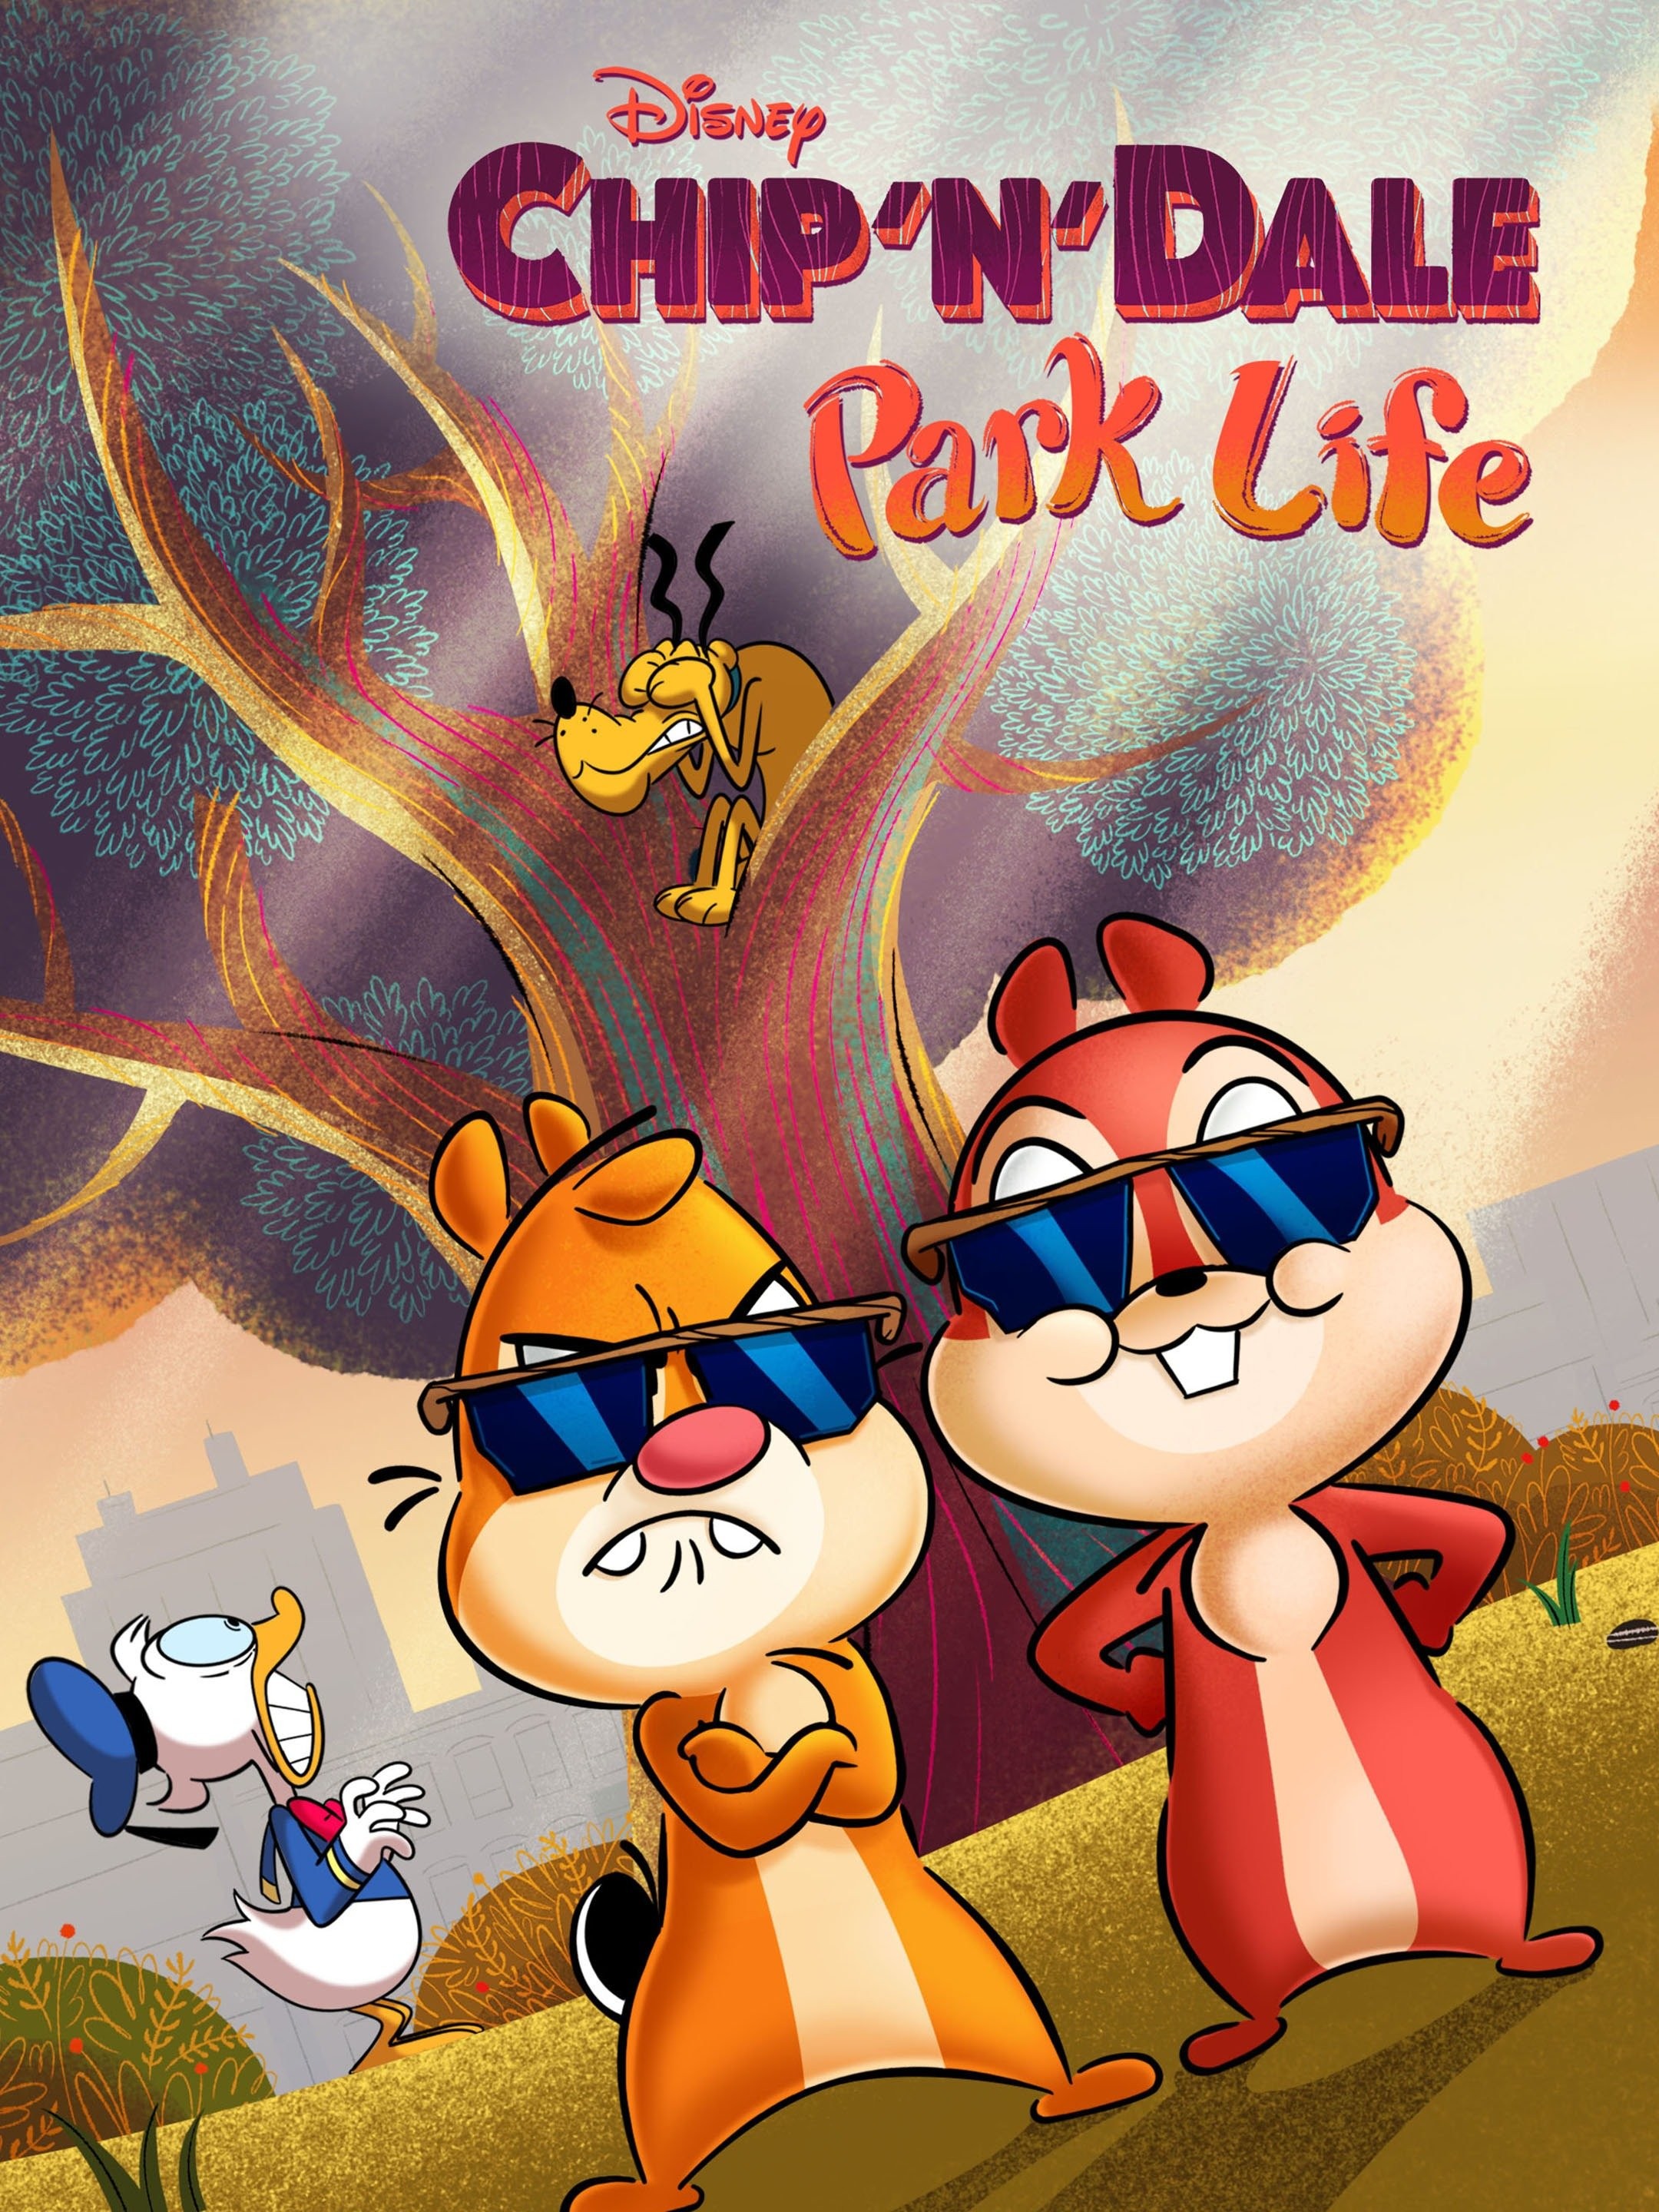 Chip 'n' Dale: Park Life, Official Trailer